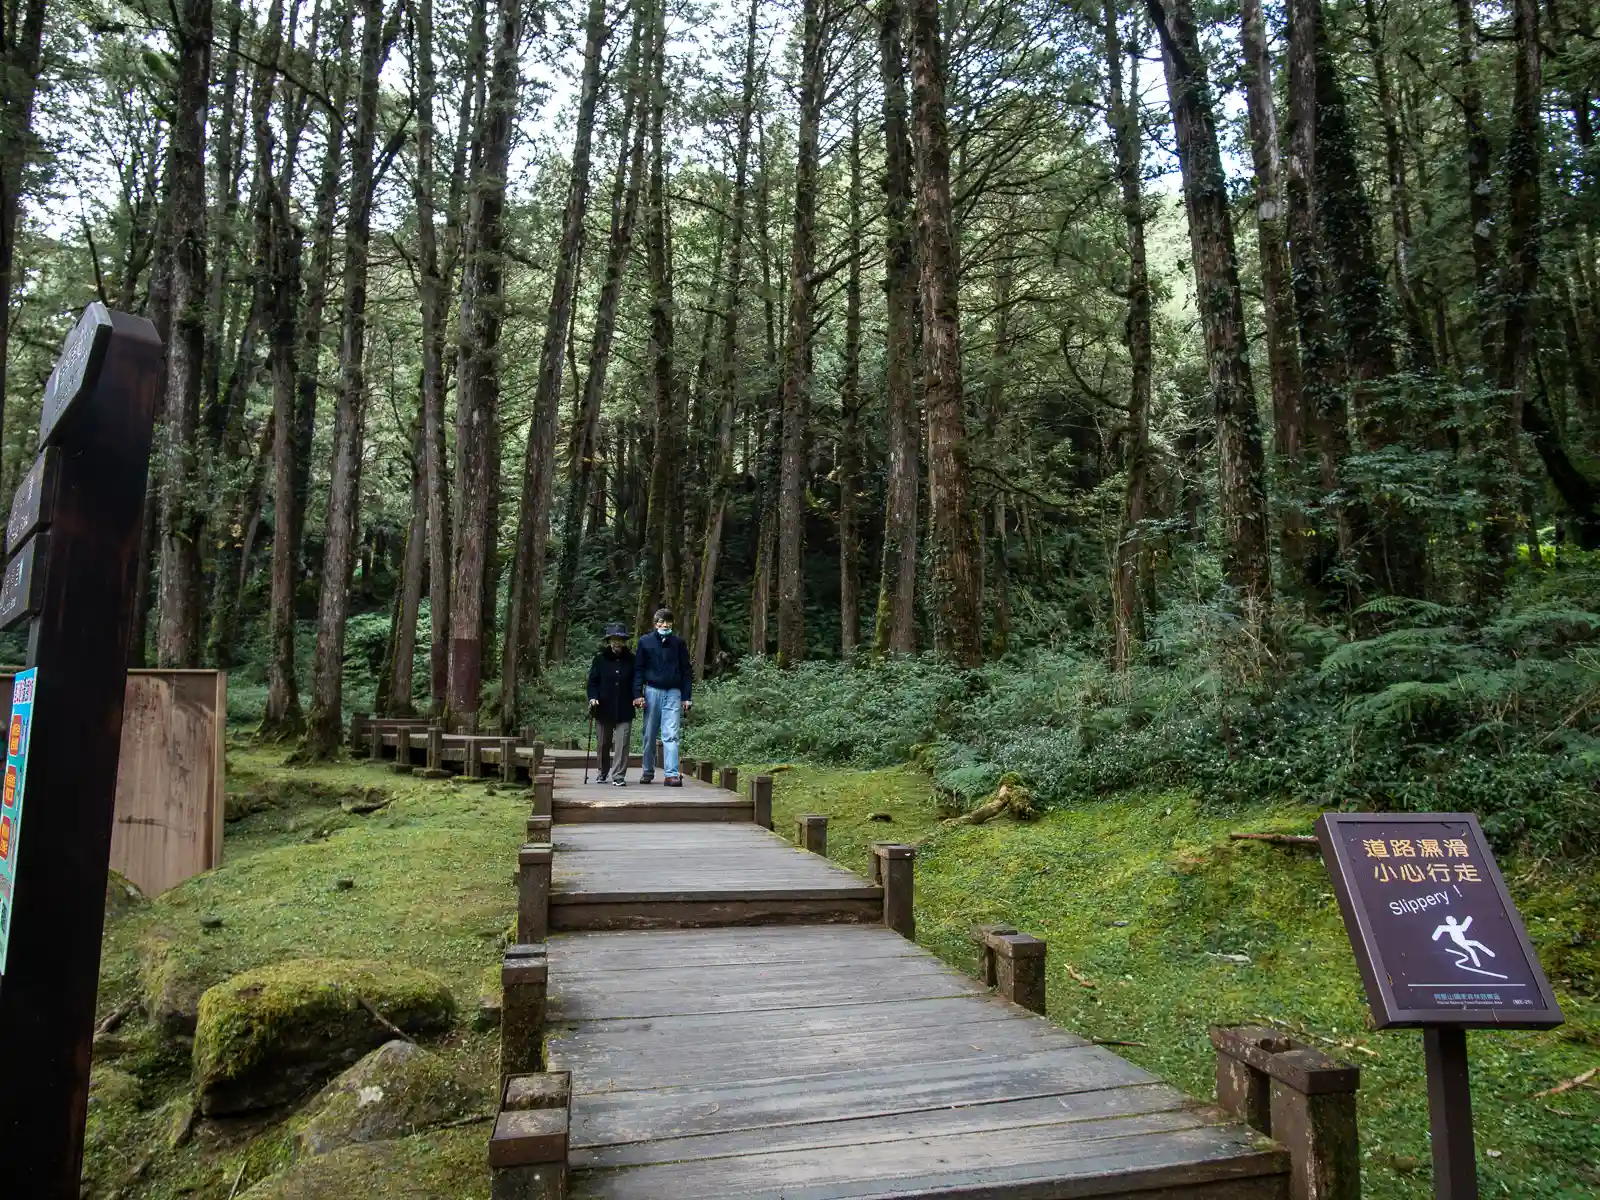 A senior couple walks along a wooden boardwalk in the recreation area.